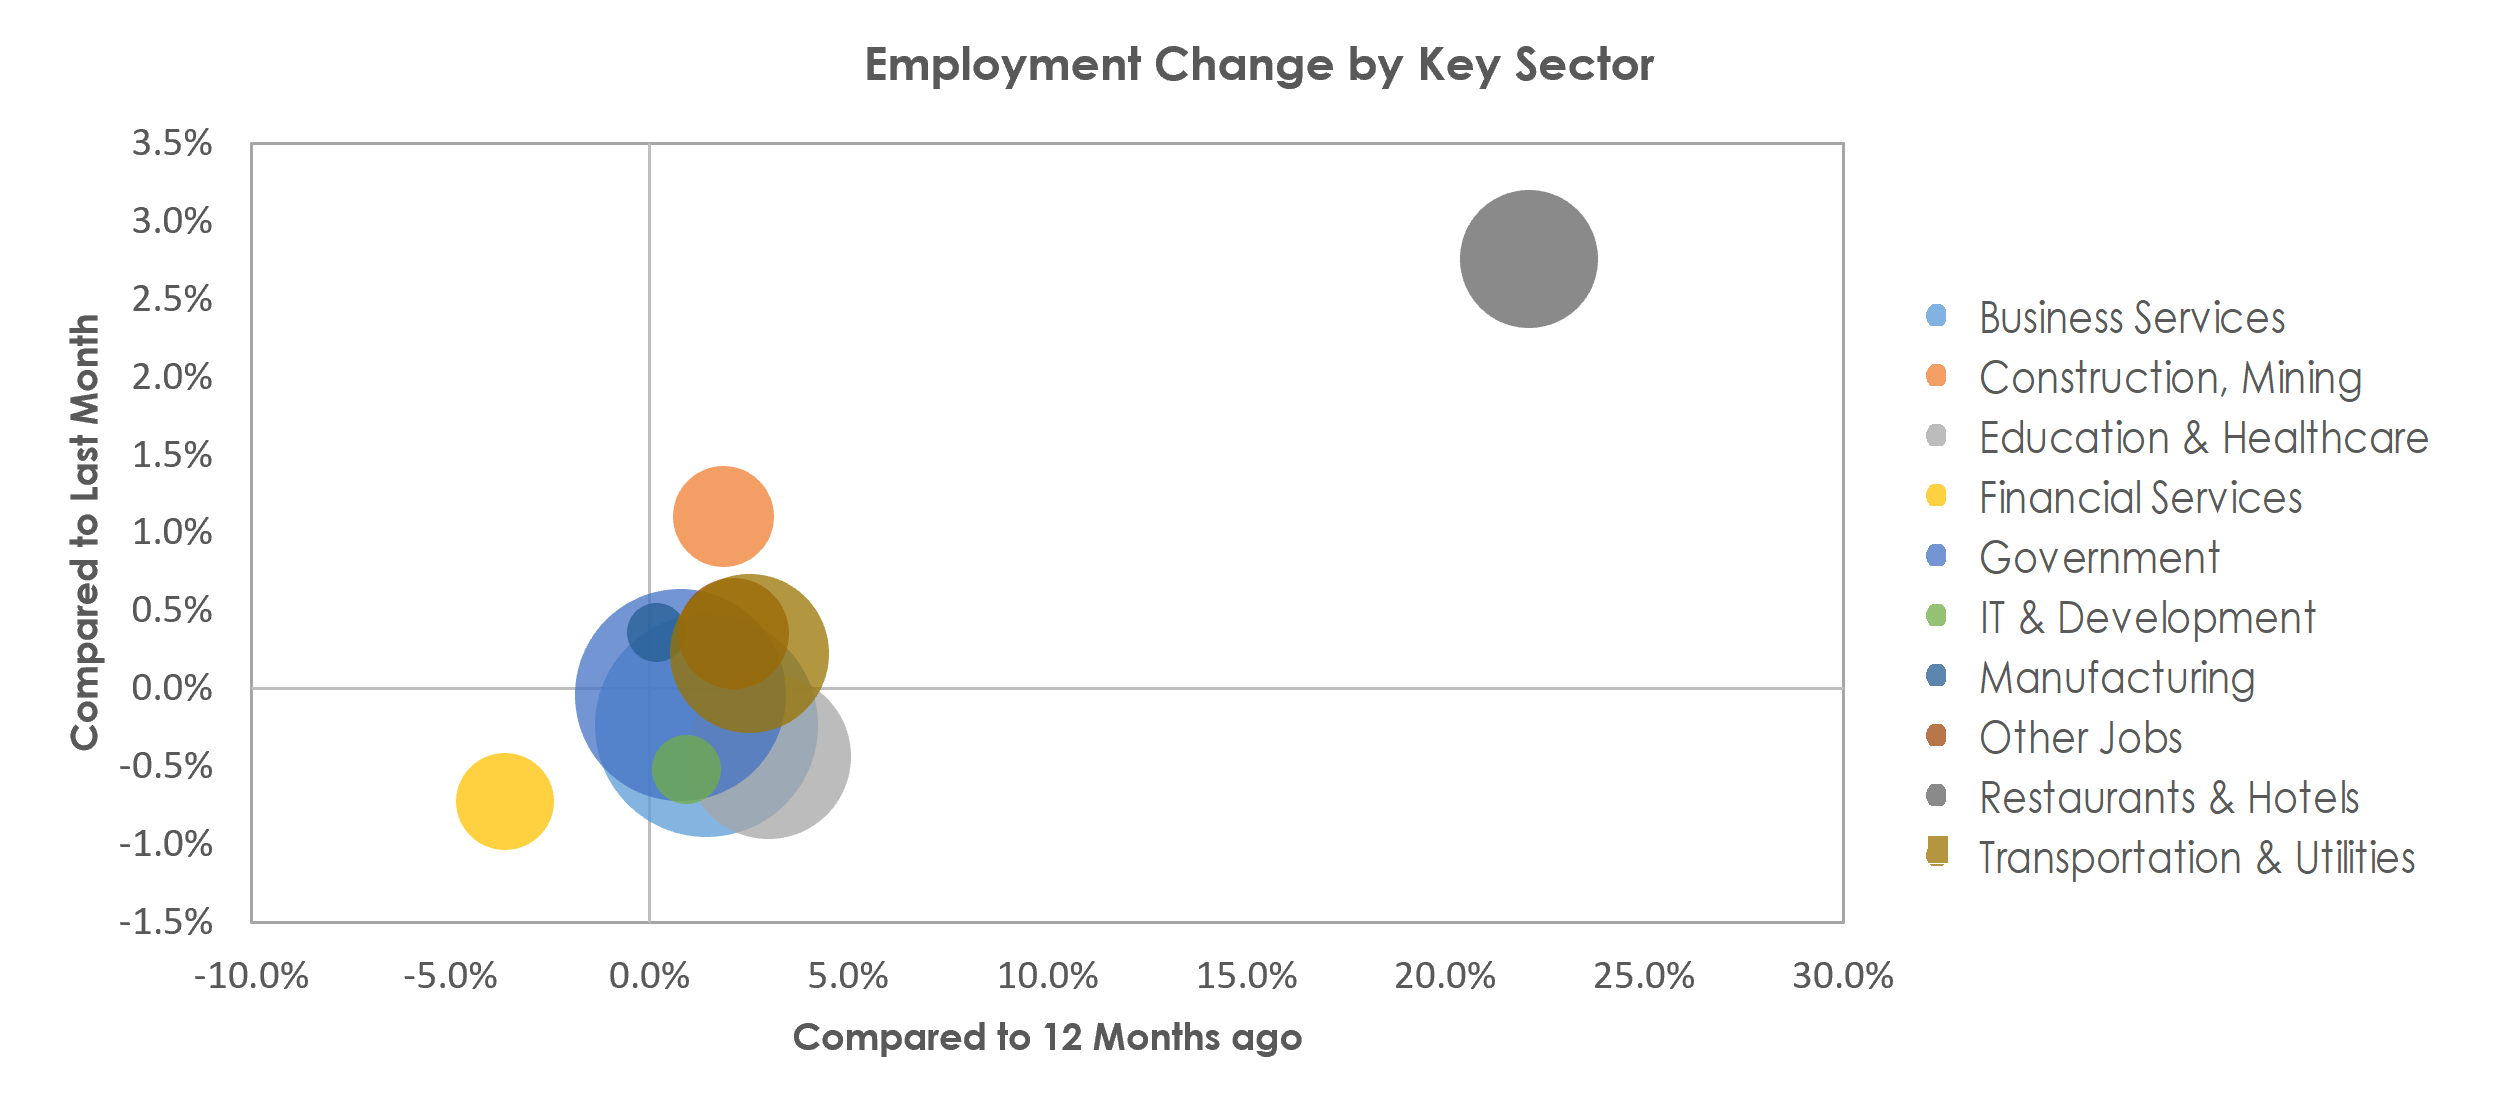 Washington-Arlington-Alexandria, DC-VA-MD-WV Unemployment by Industry May 2022